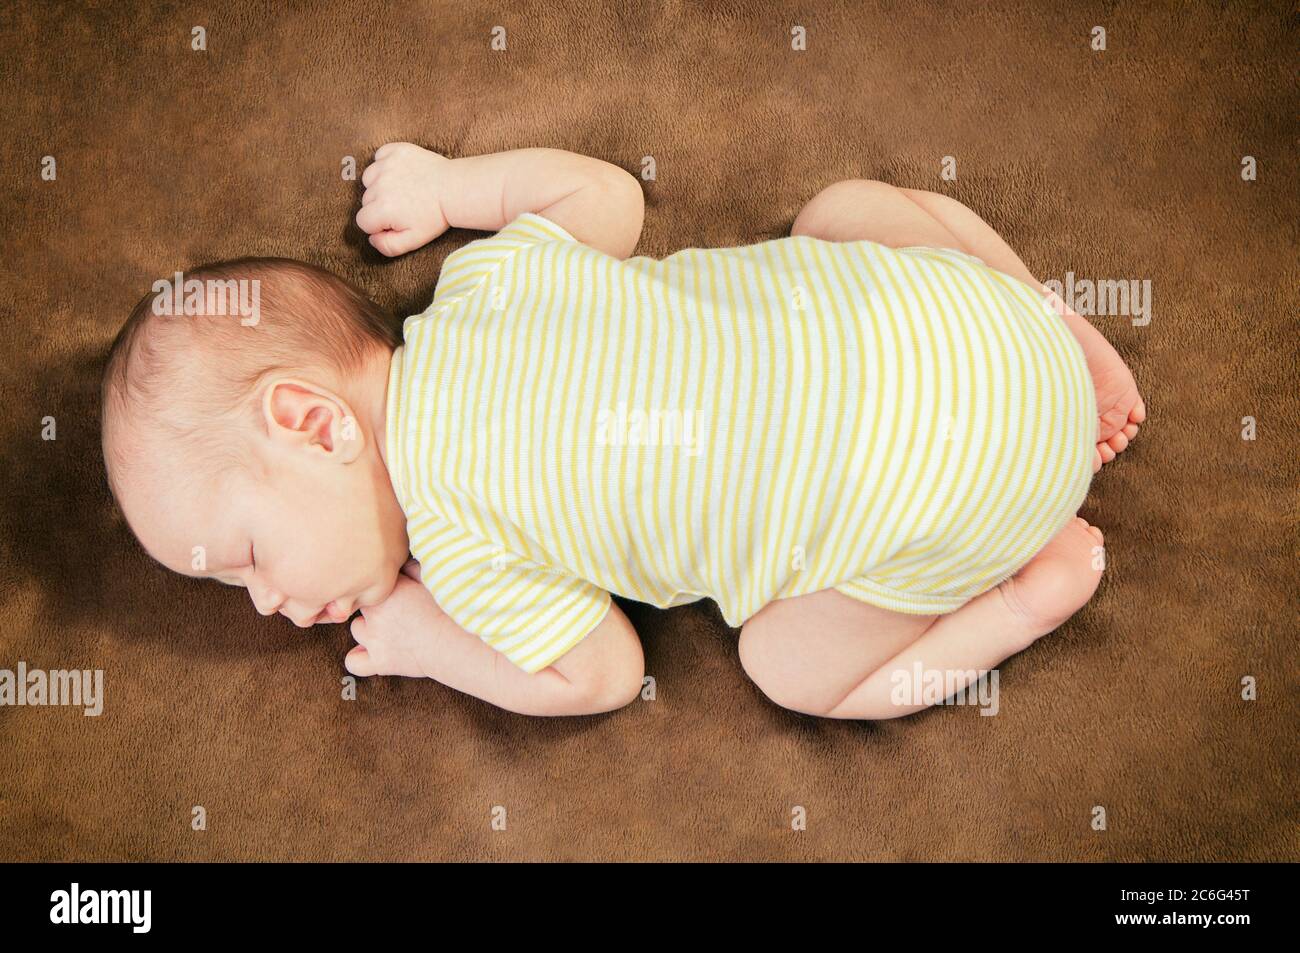 Beautiful newborn baby boy sleeping peacefully on the soft brown blanket Stock Photo